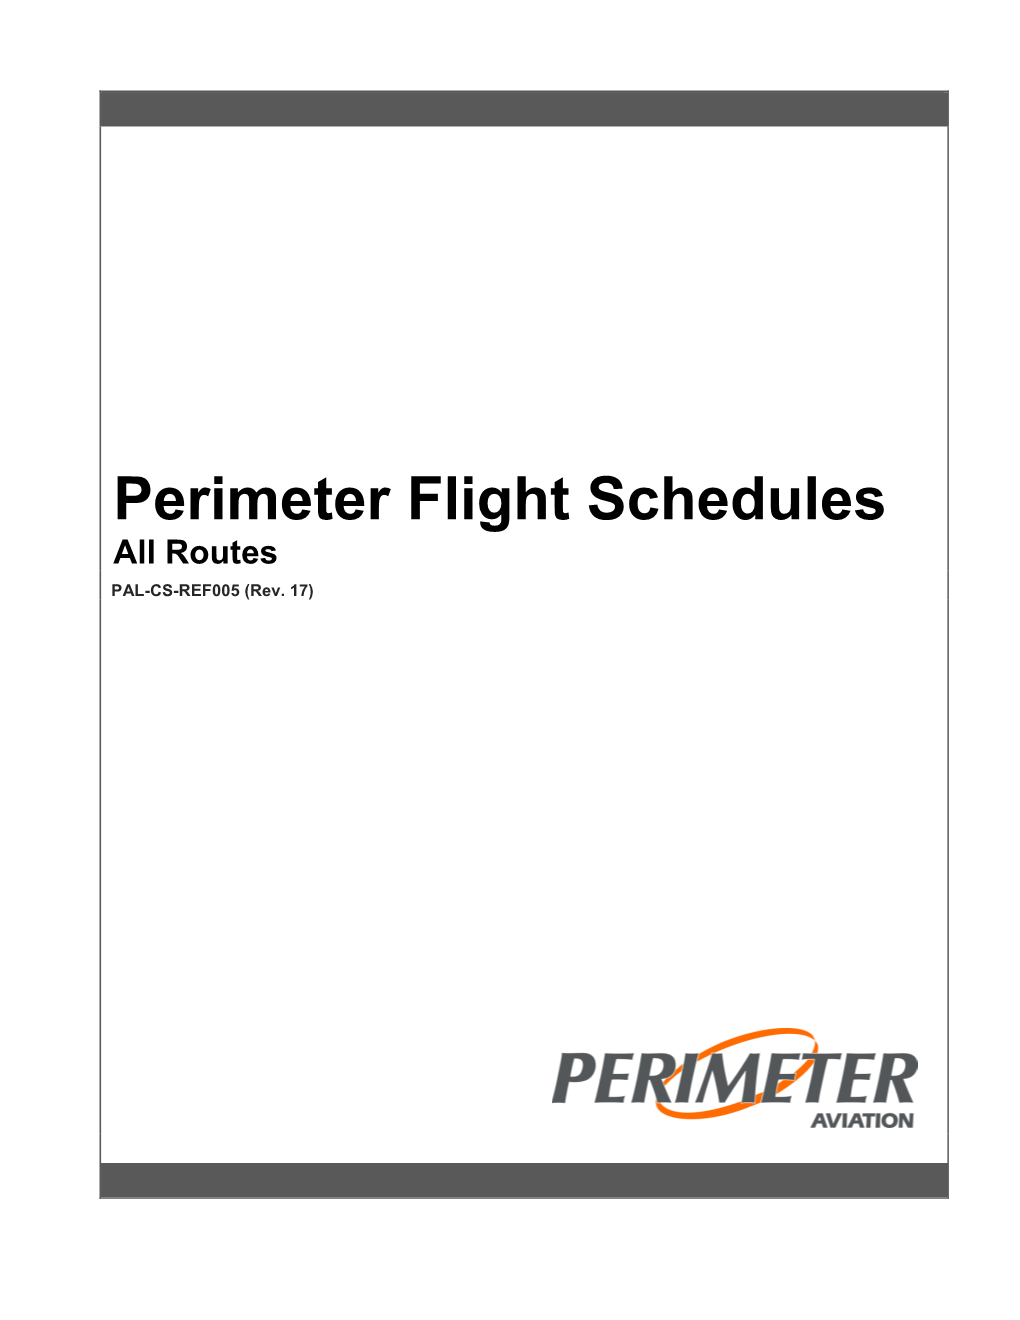 Perimeter Flight Schedules All Routes PAL-CS-REF005 (Rev